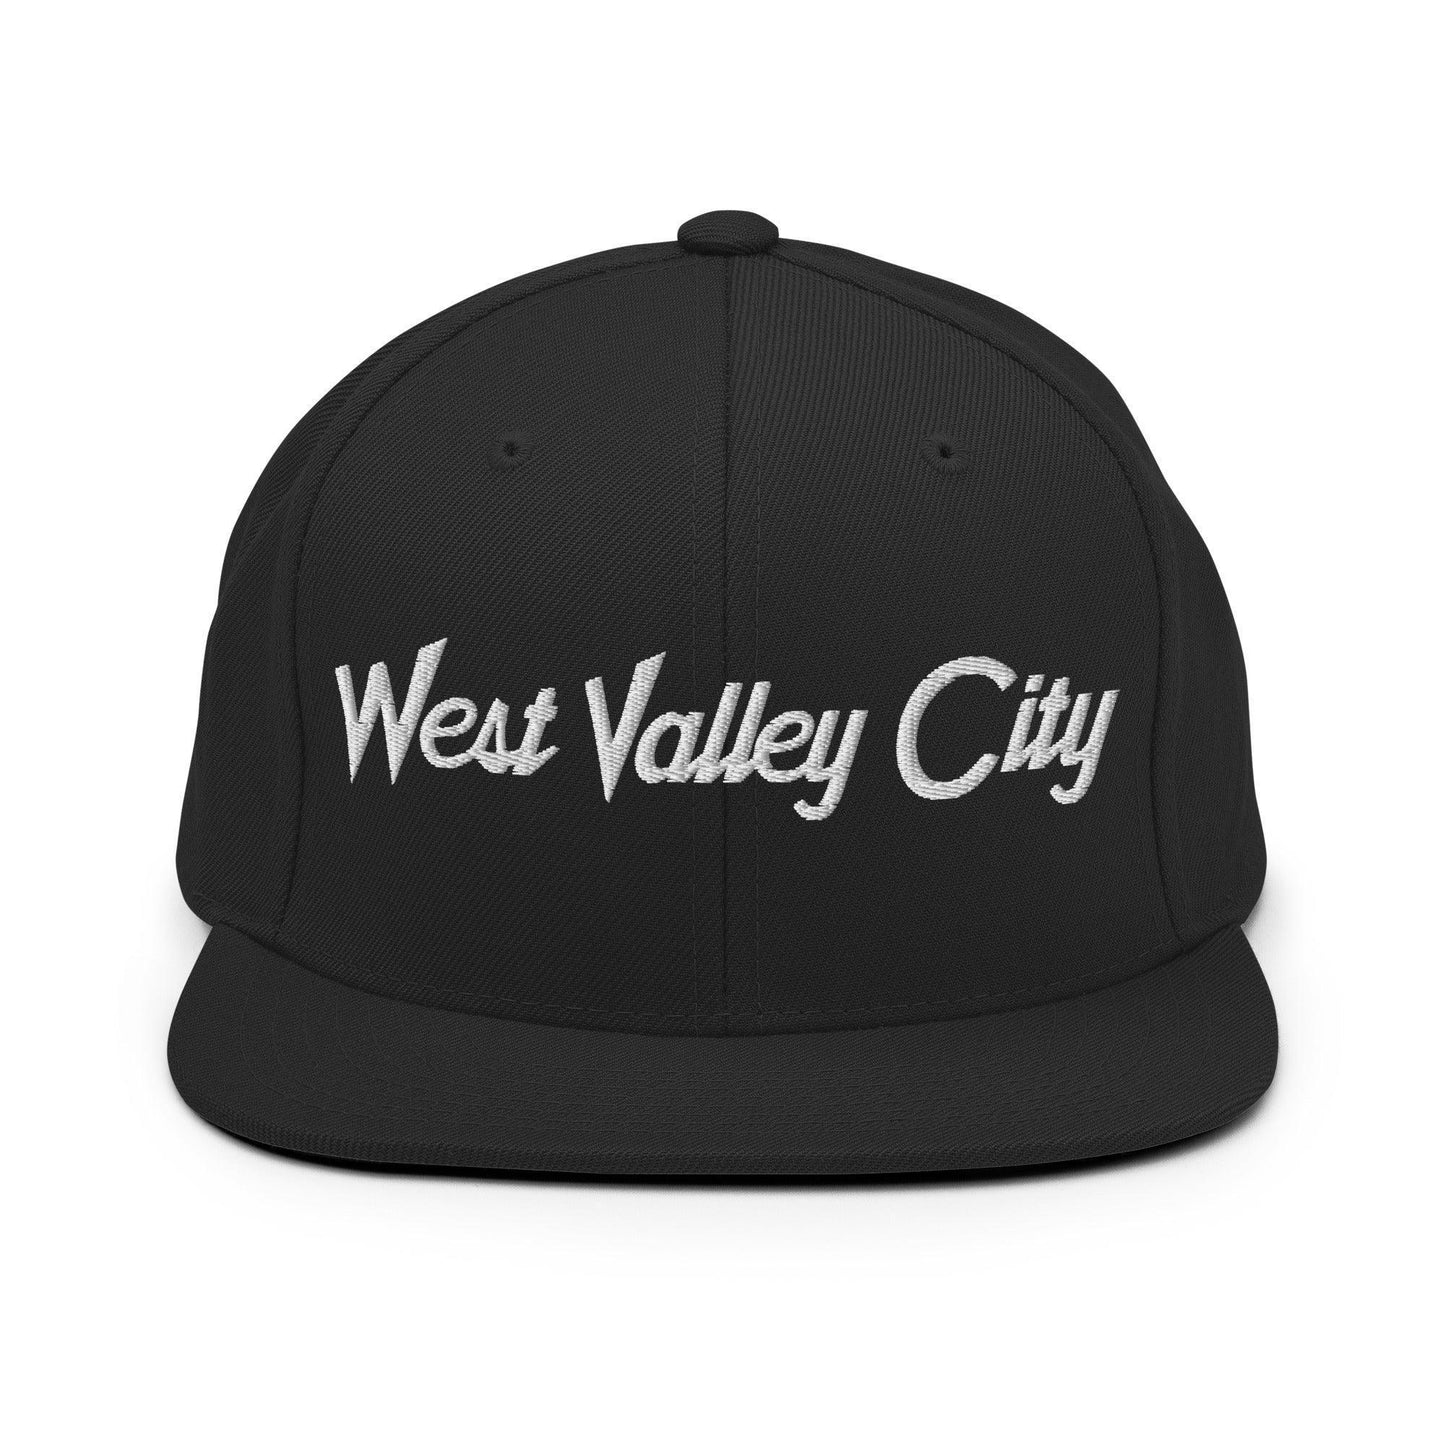 West Valley City Script Snapback Hat Black